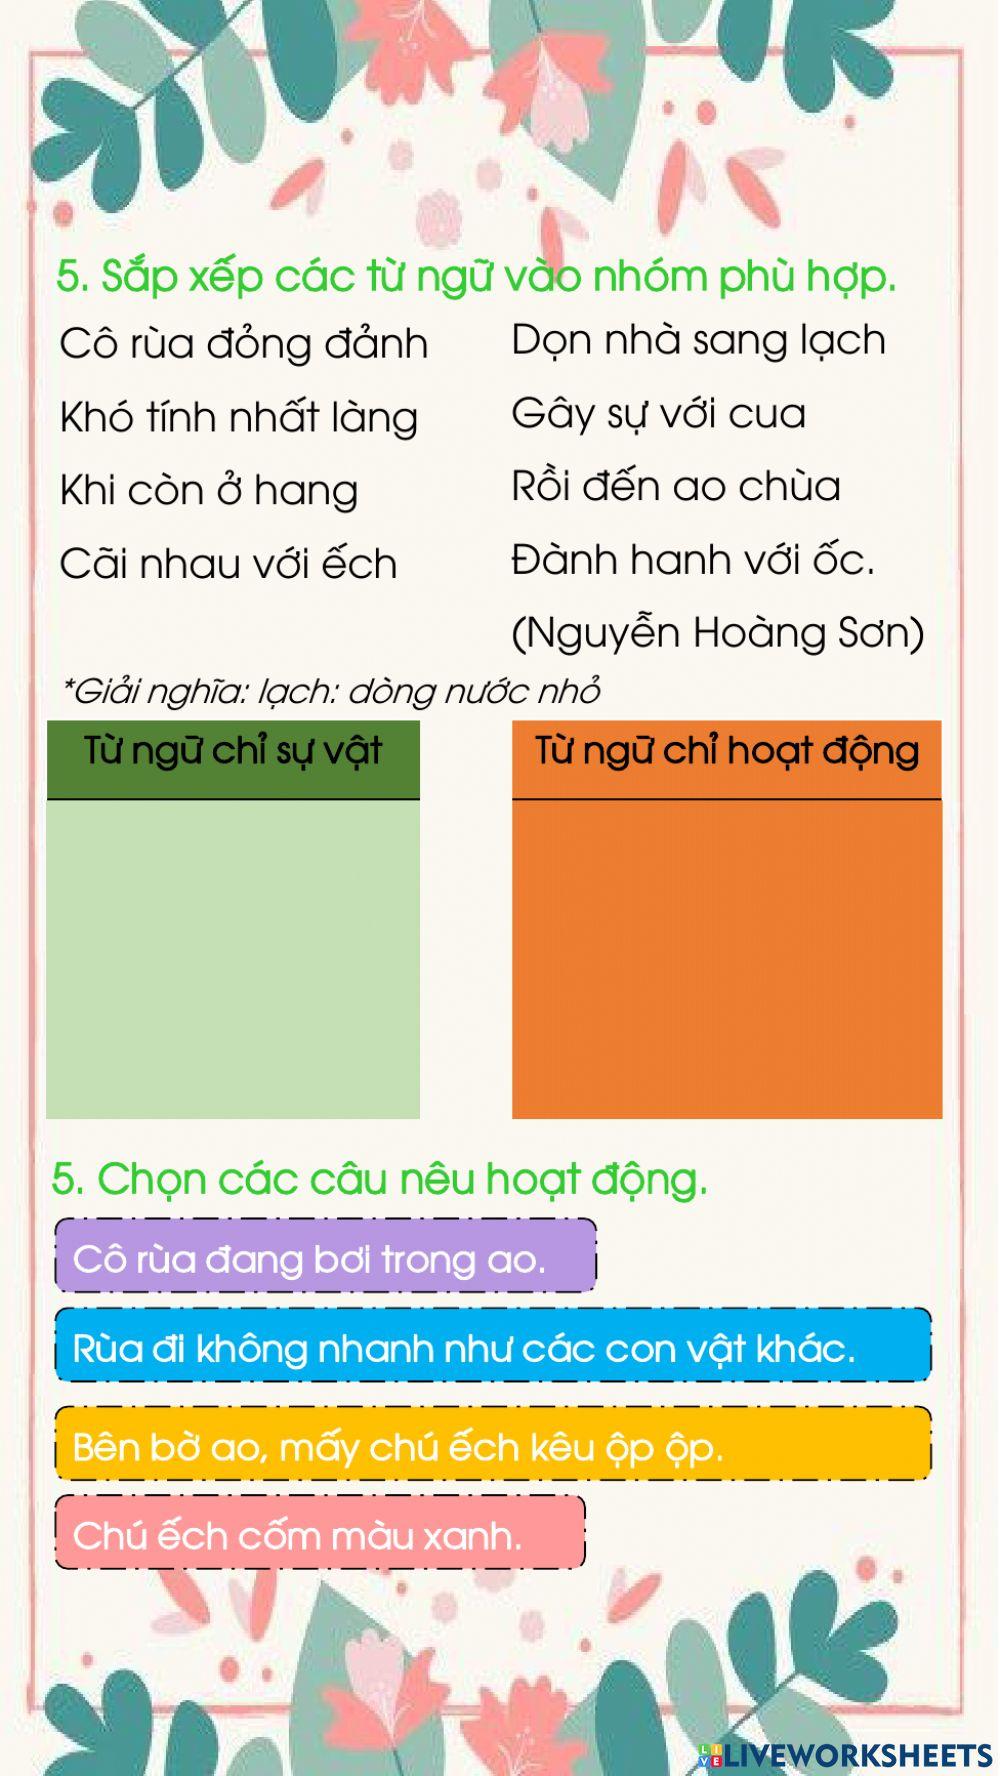 BTCT 26 - Tiếng Việt